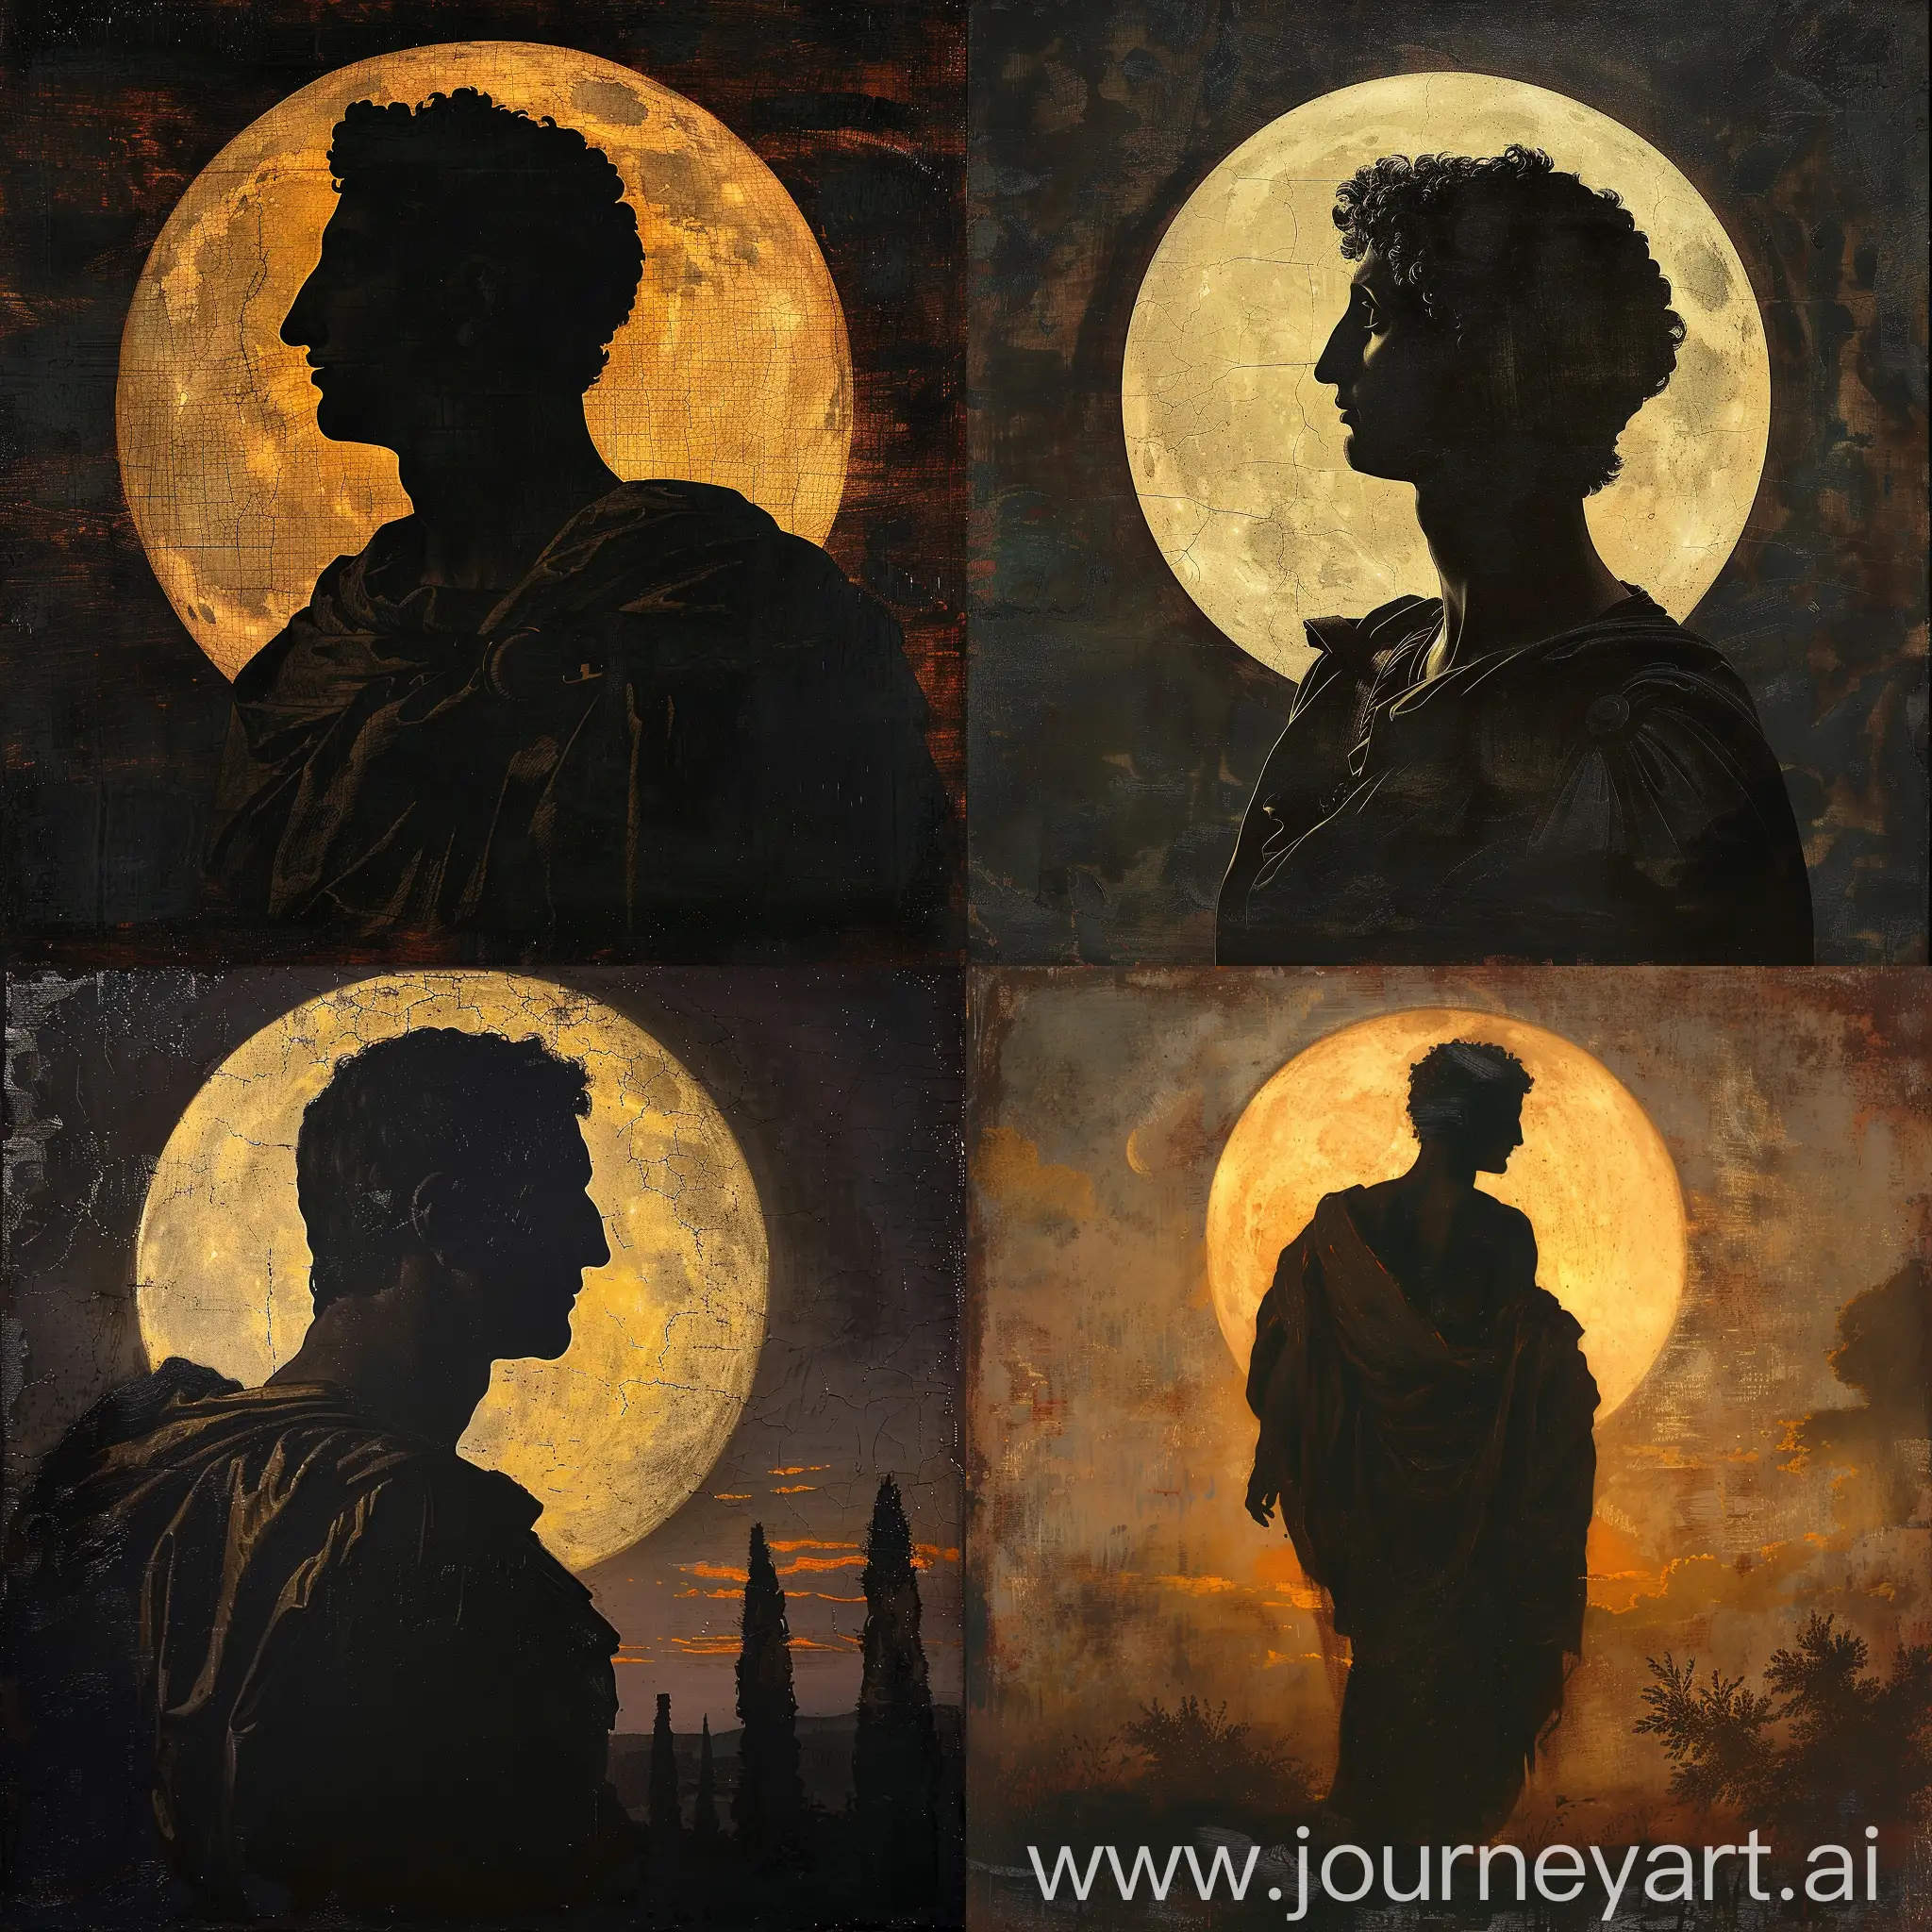 Young, Ceasar, Renaissance art, silhouette, moon behind, portrait